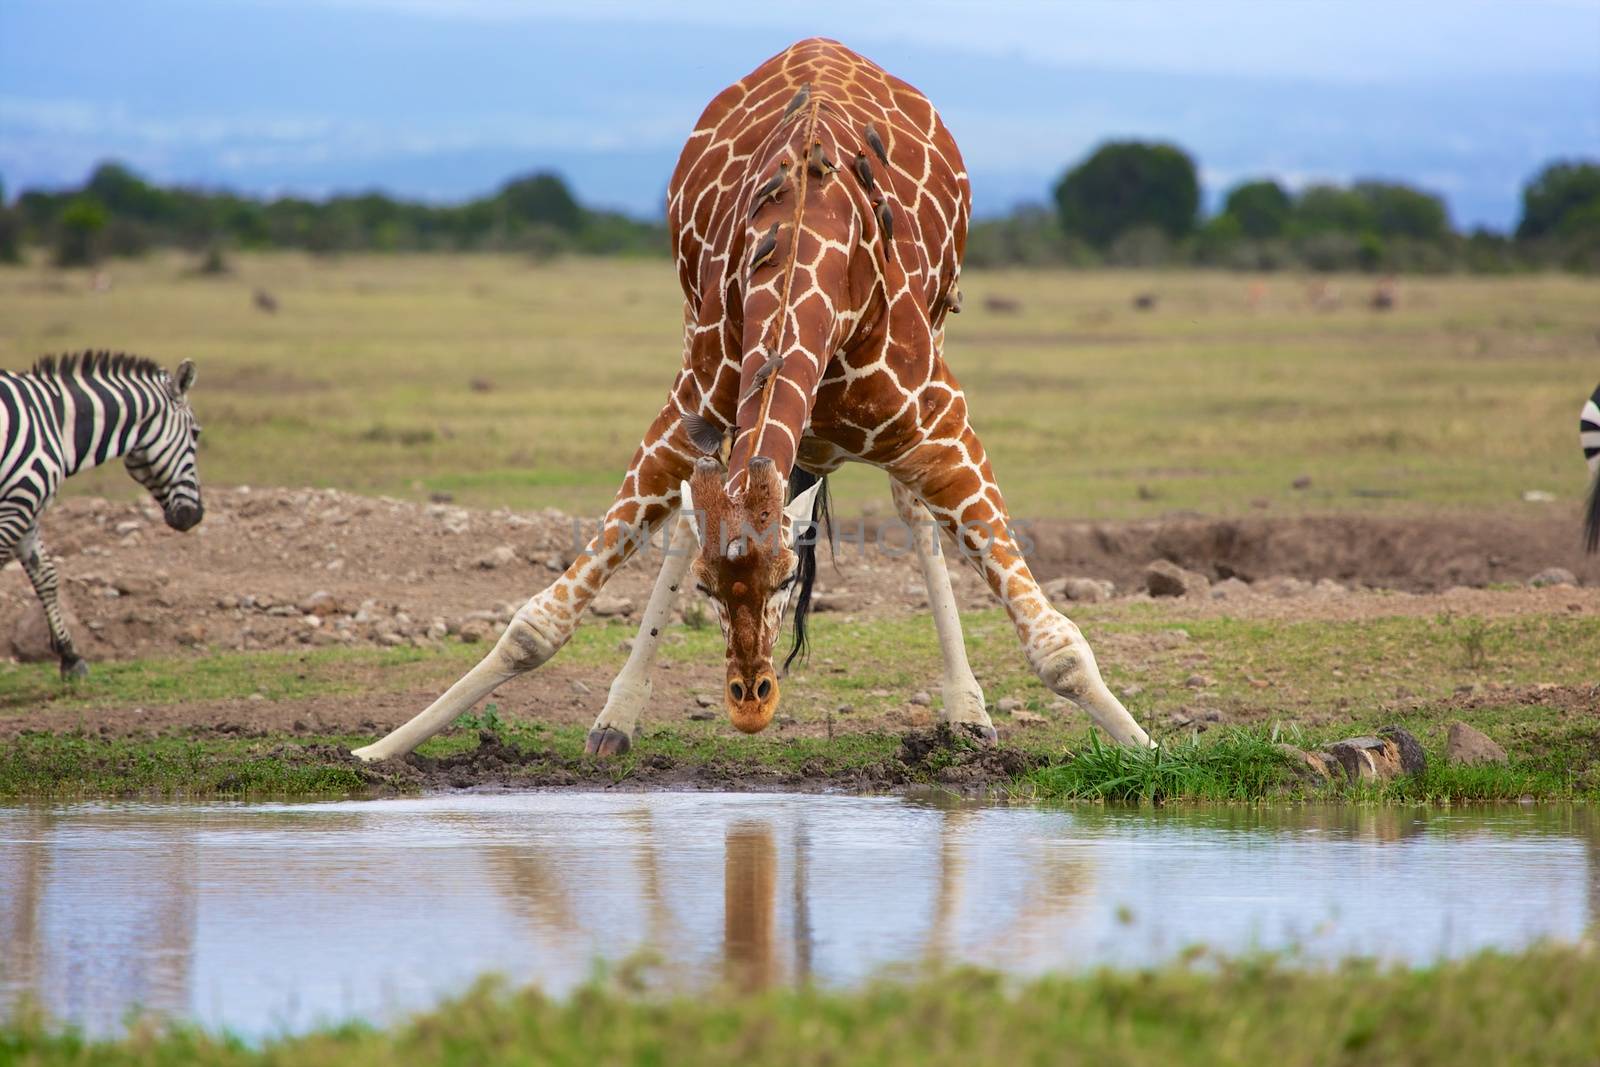 masai girafe at a waterhole samburu kenya by photogallet